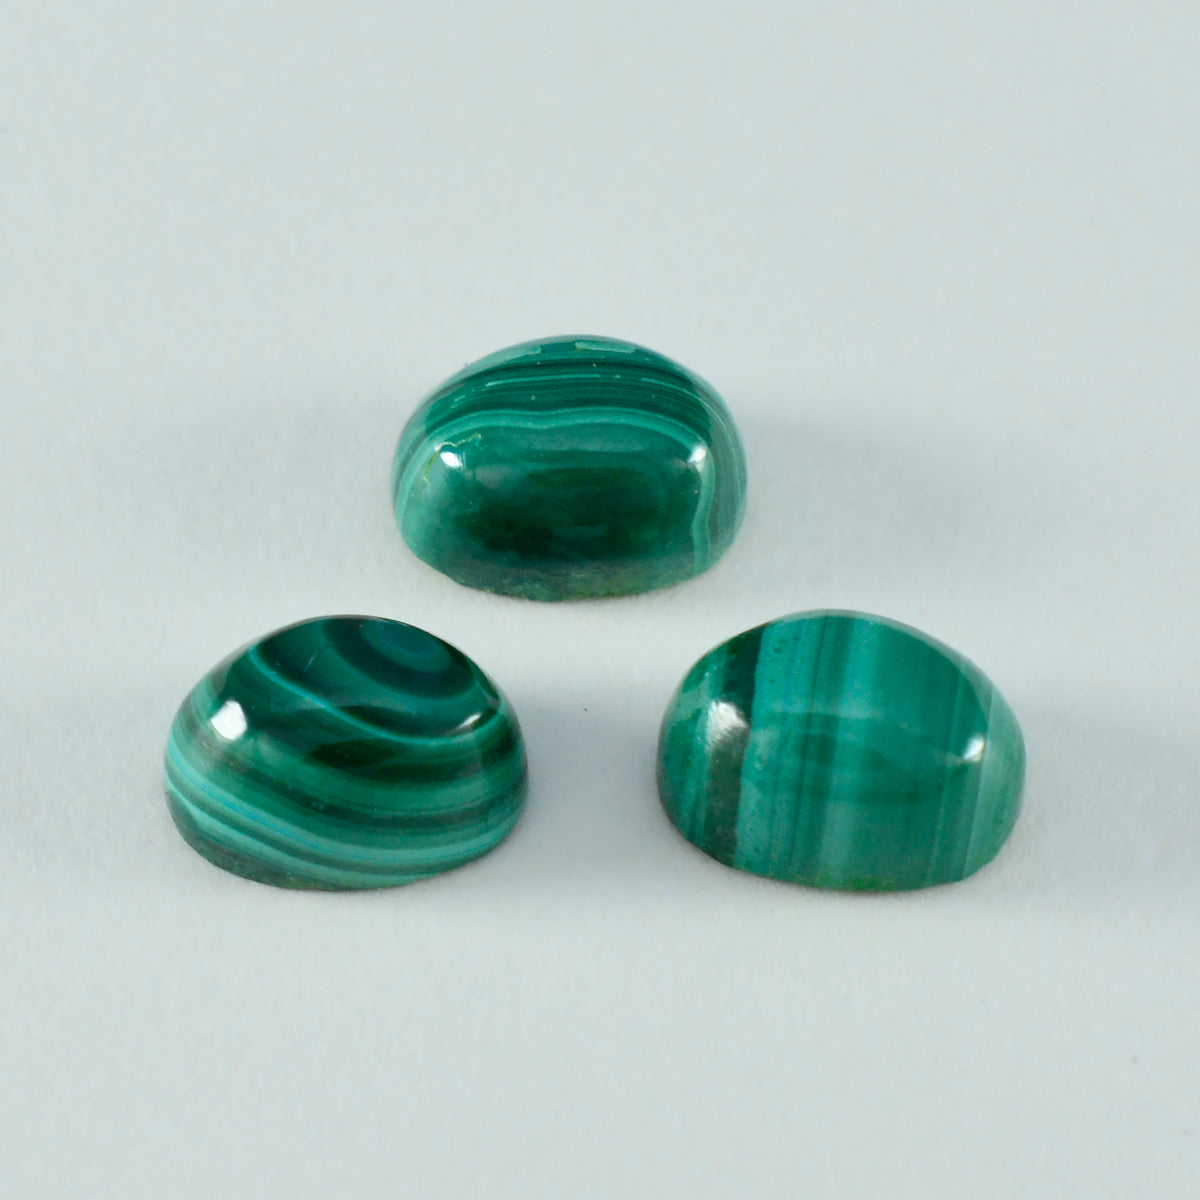 Riyogems 1PC groene malachiet cabochon 3x5 mm ovale vorm prachtige kwaliteit losse edelsteen